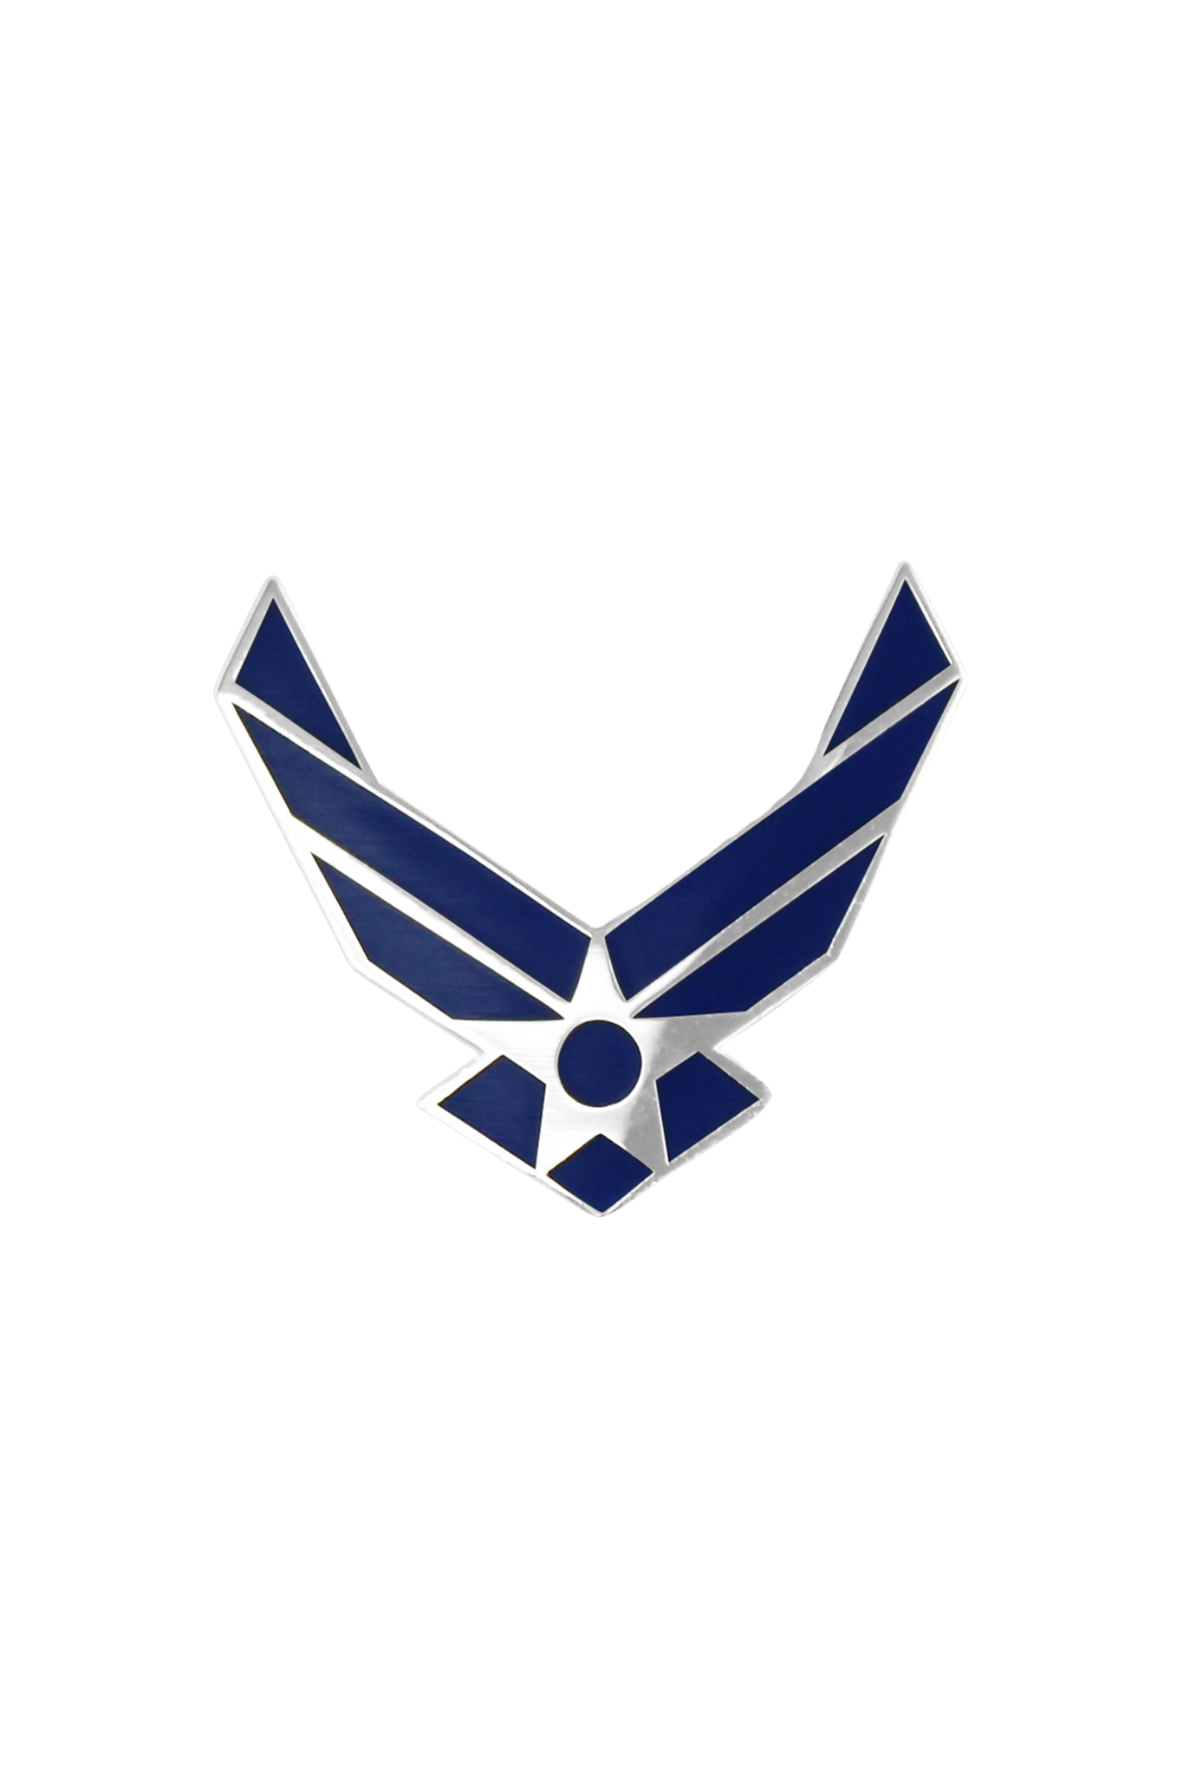 USAF Falcon